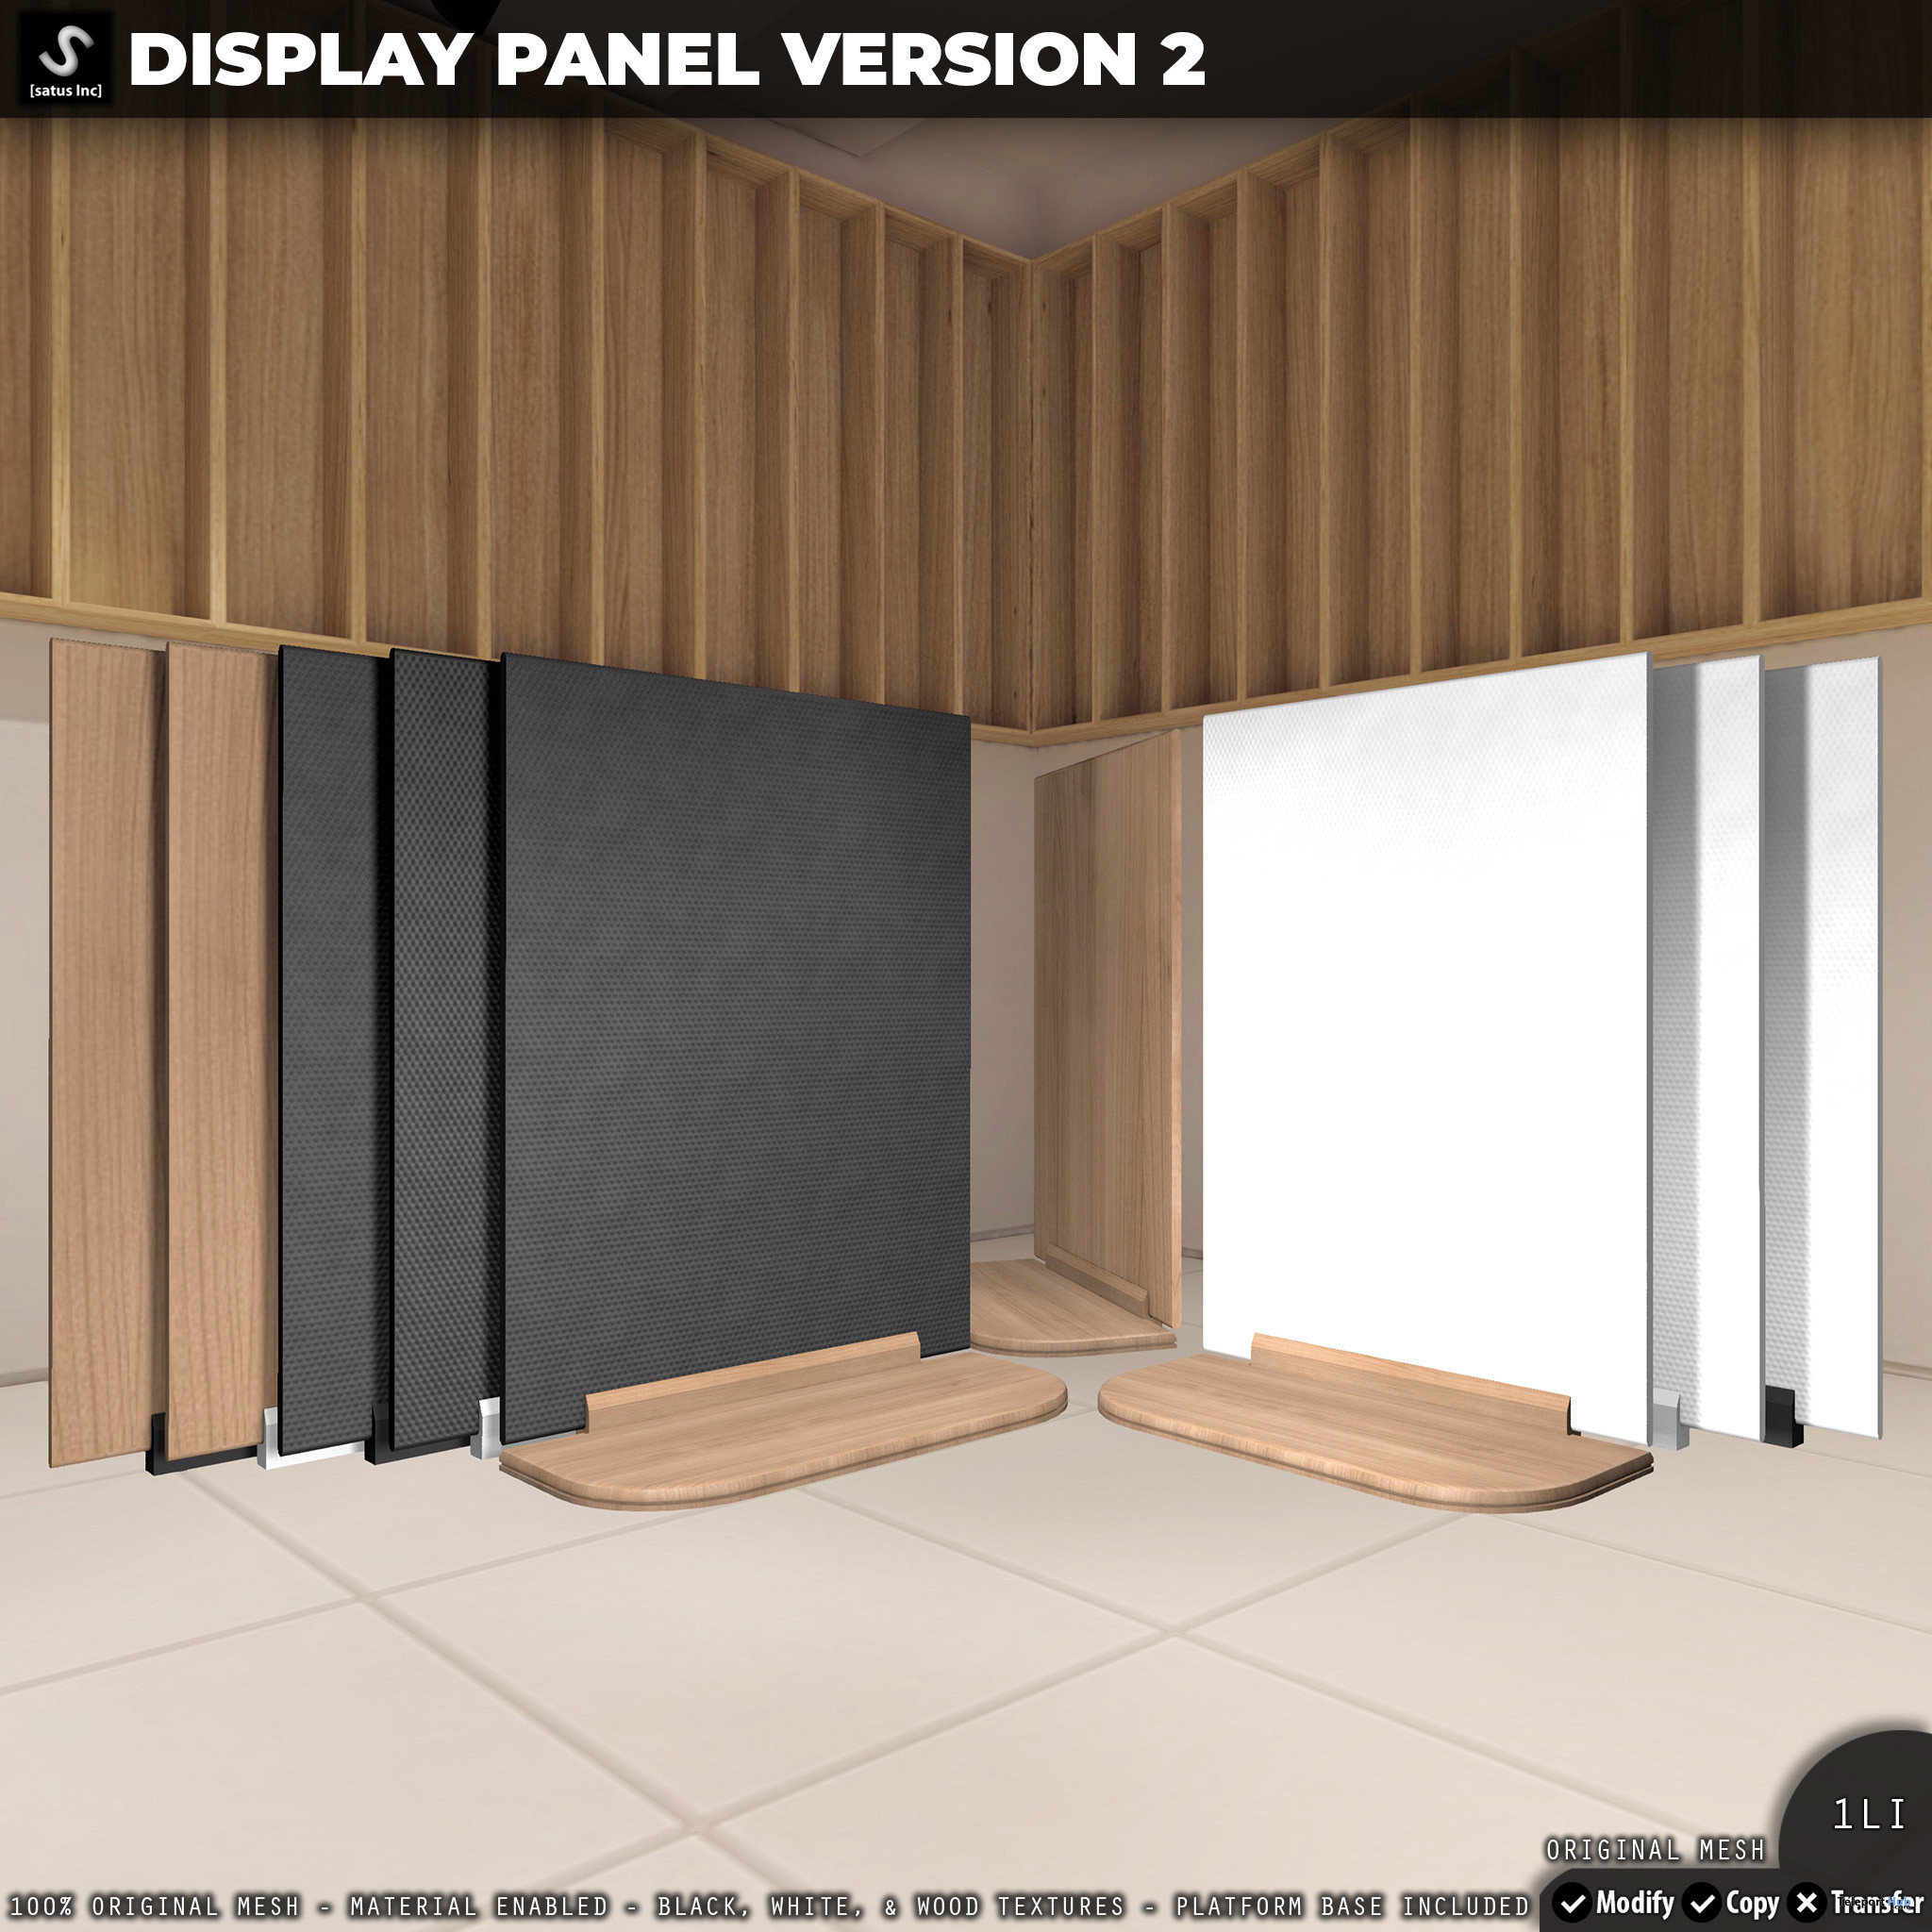 New Release: Display Panel Version 2 by [satus Inc] - Teleport Hub - teleporthub.com